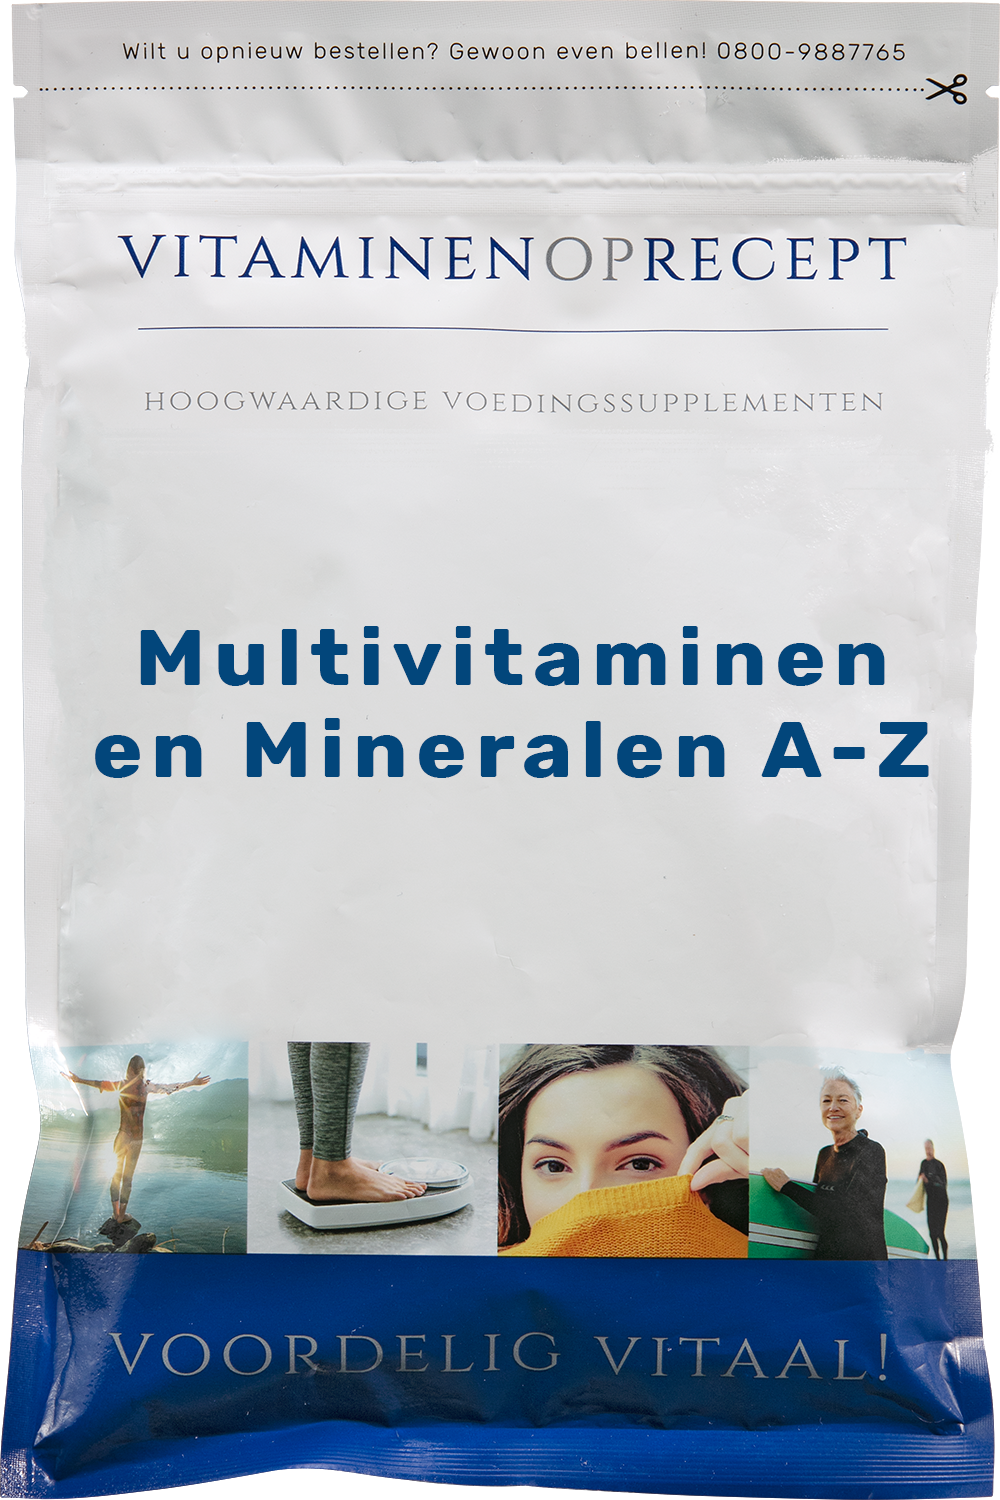 Diplomaat dividend seks Multivitaminen en Mineralen A-Z | Vitaminen op Recept